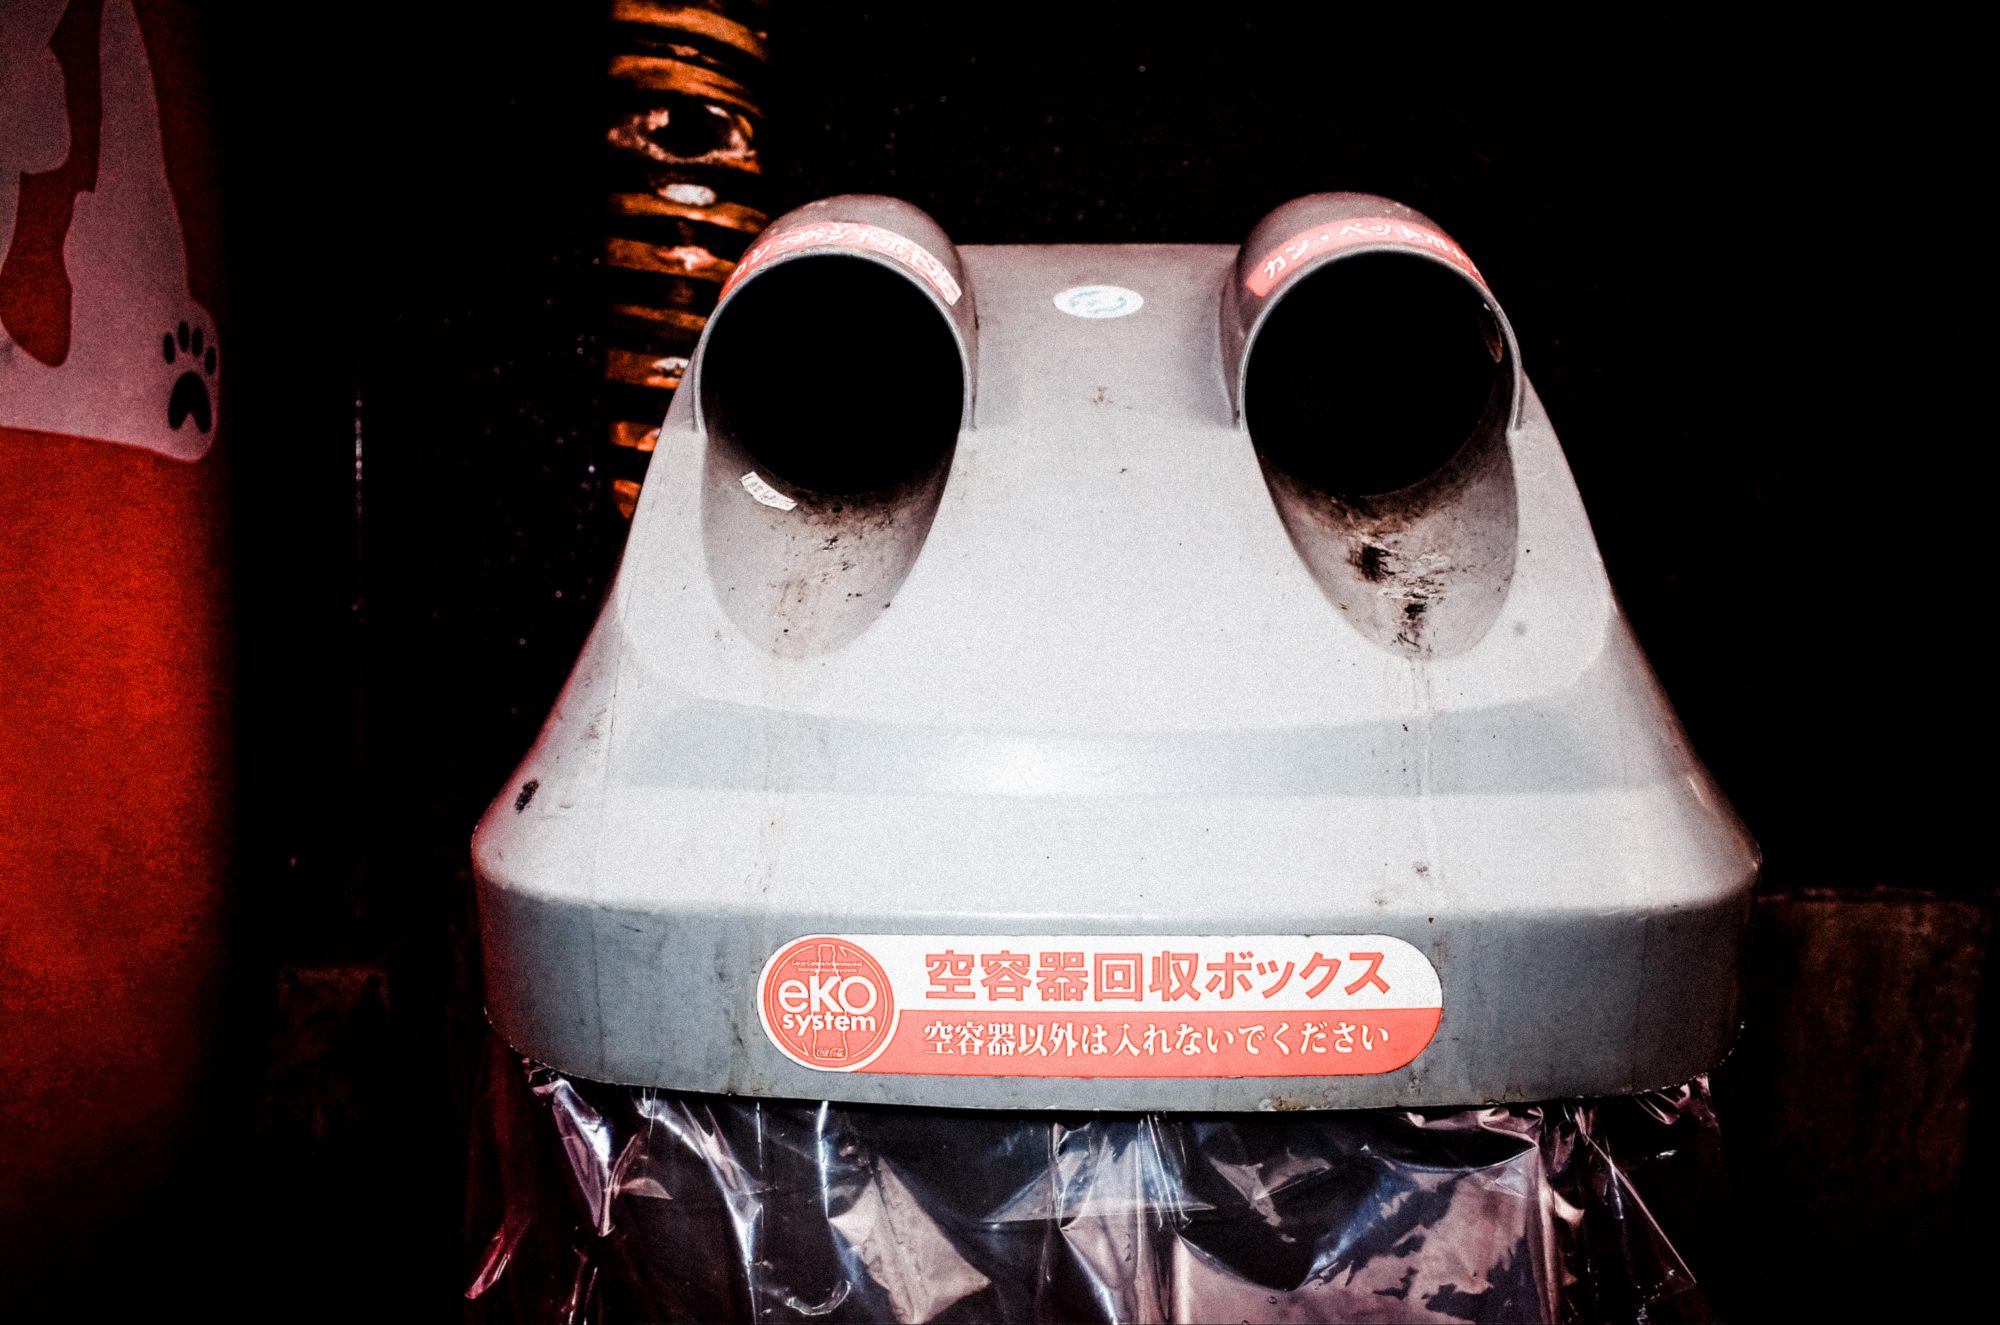 Frog garbage can. Tokyo, 2017